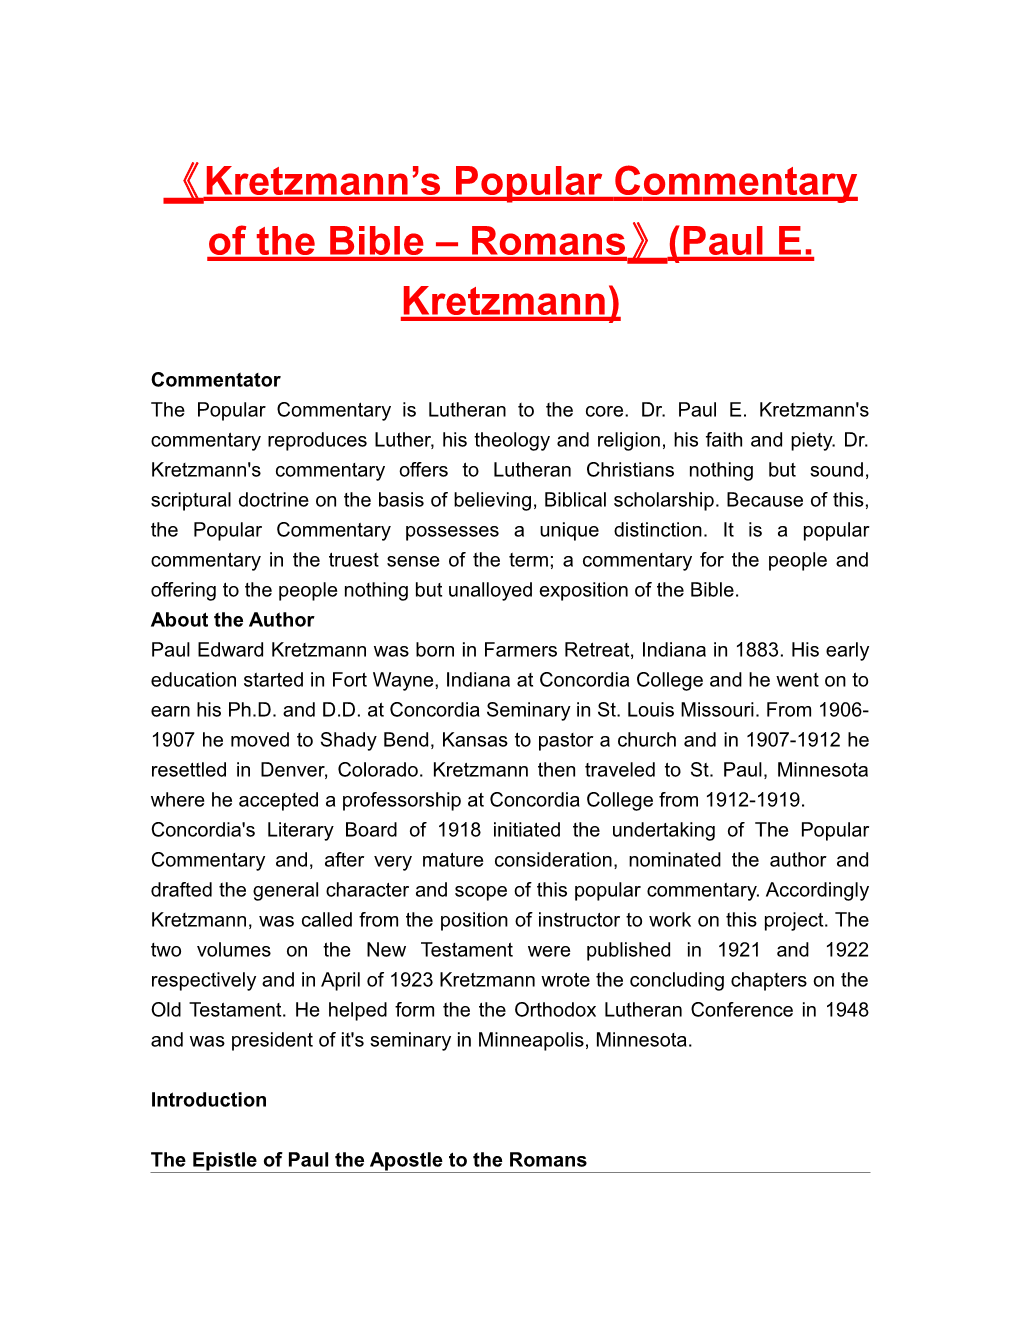 Kretzmann S Popularcommentary of the Bible Romans (Paul E. Kretzmann)